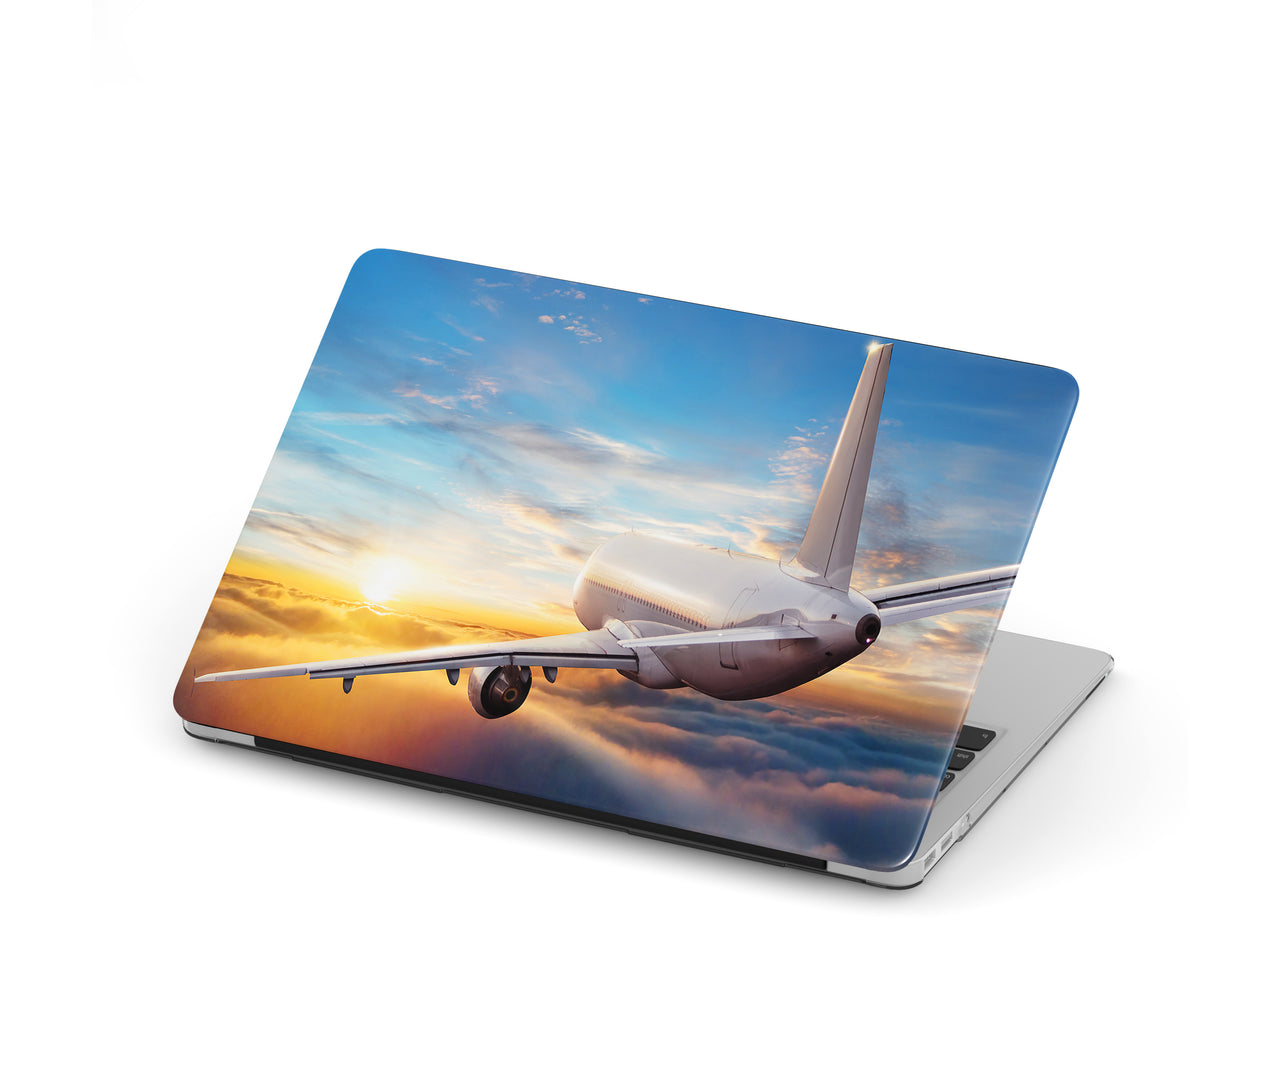 Airliner Jet Cruising over Clouds Designed Macbook Cases